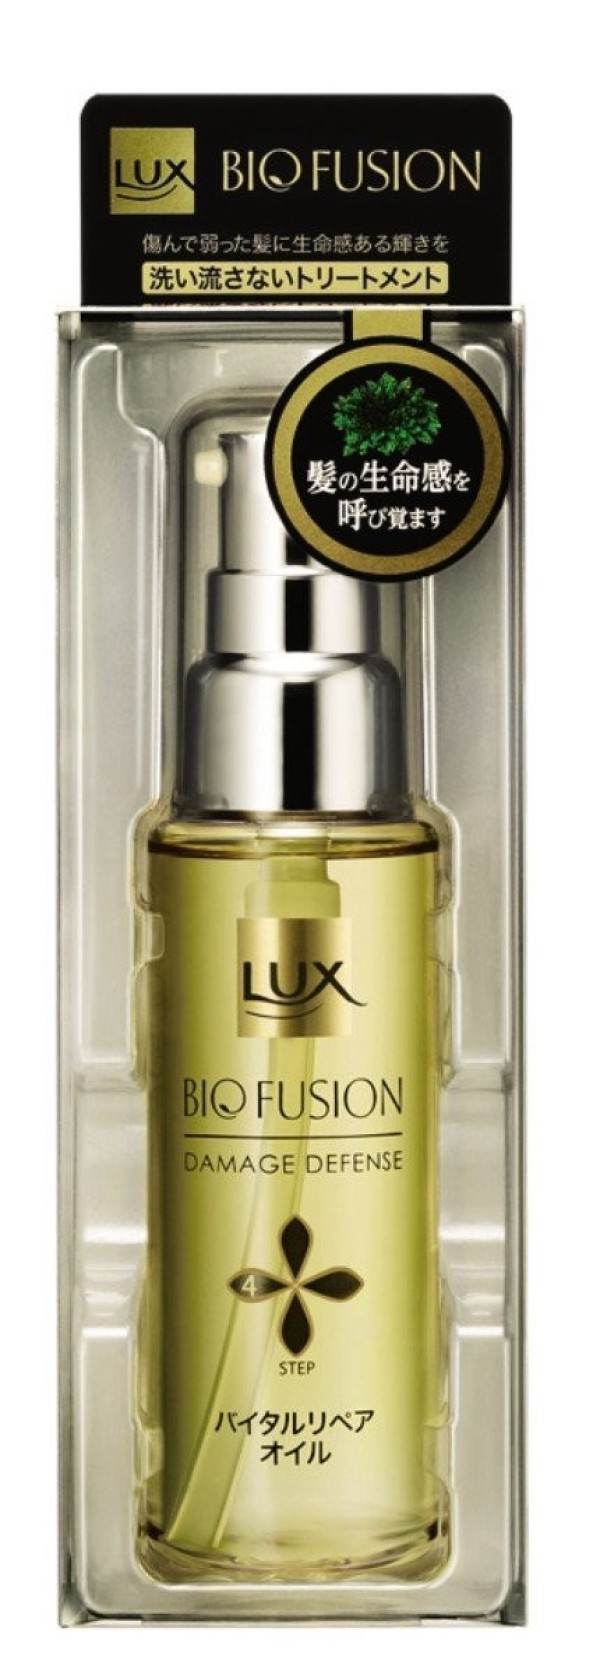 Lux Bio Fusion Damage Defense Vital Repair Oil 50ml